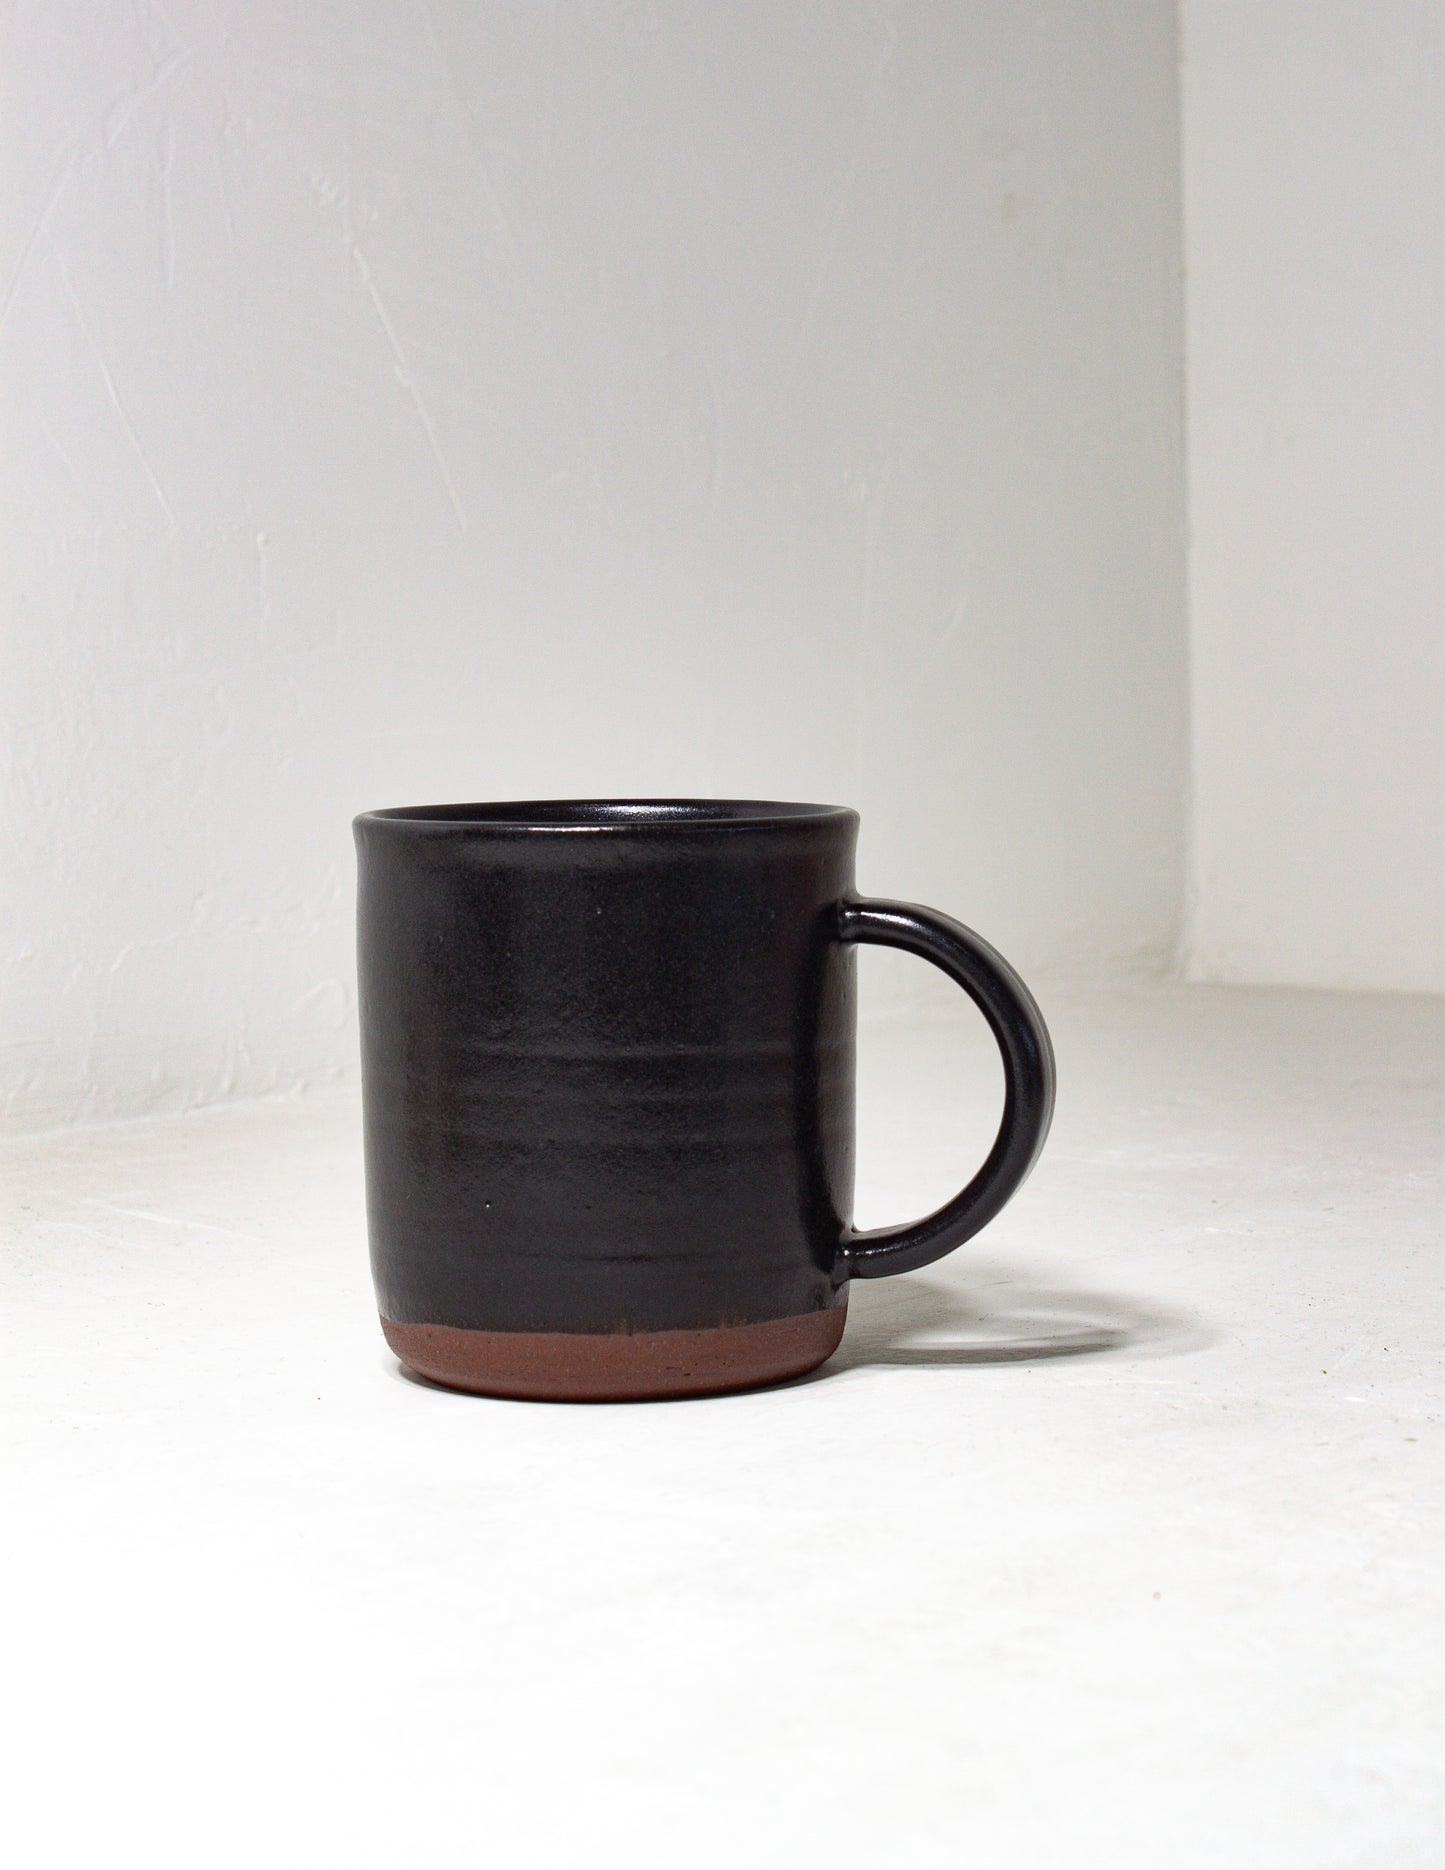 Hand thrown mug dipped in a black glaze